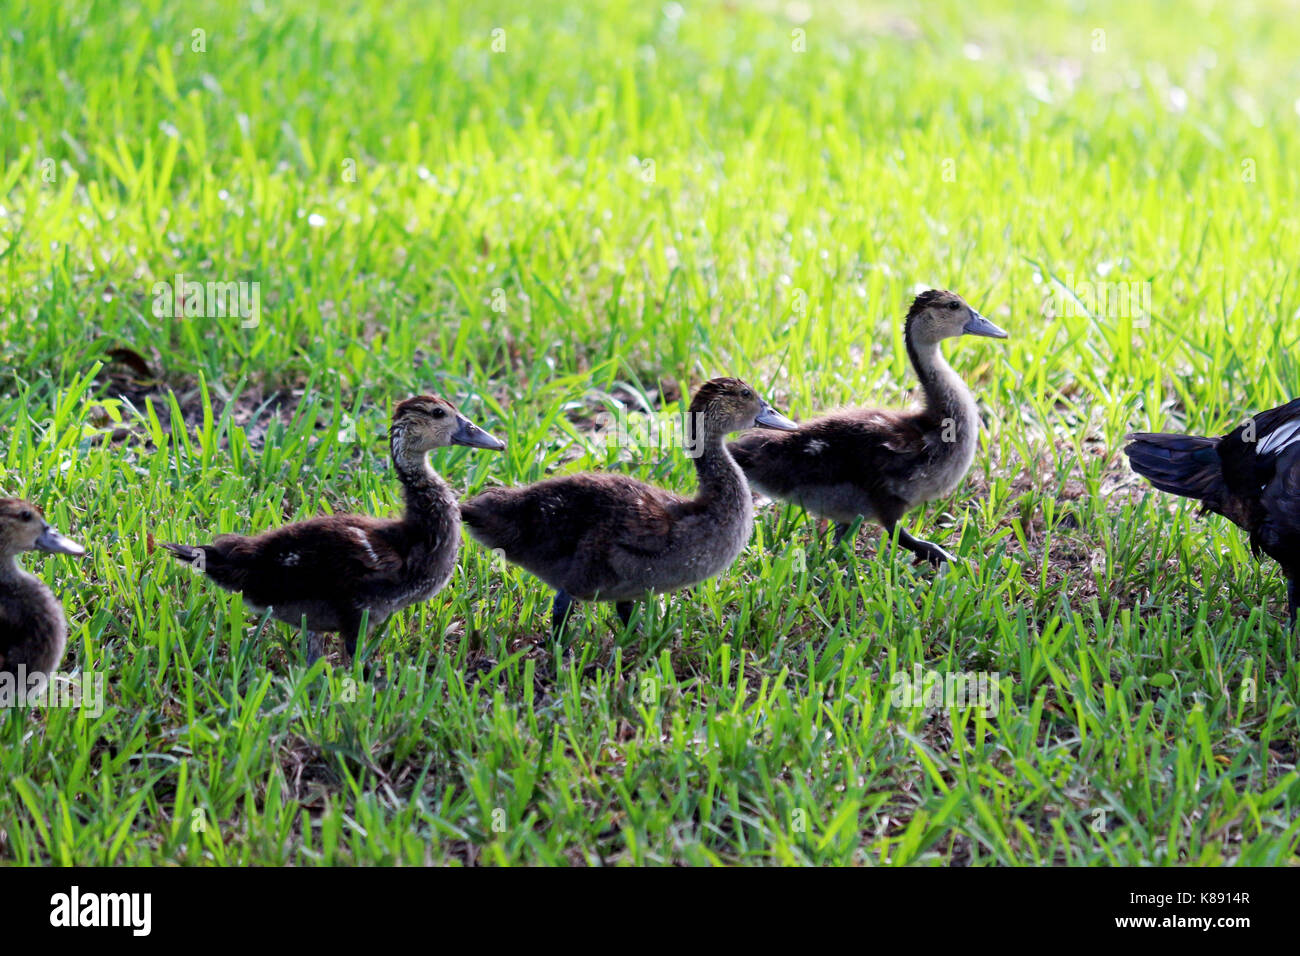 Juvenile Ducklings in a Row walking through the Grass Stock Photo